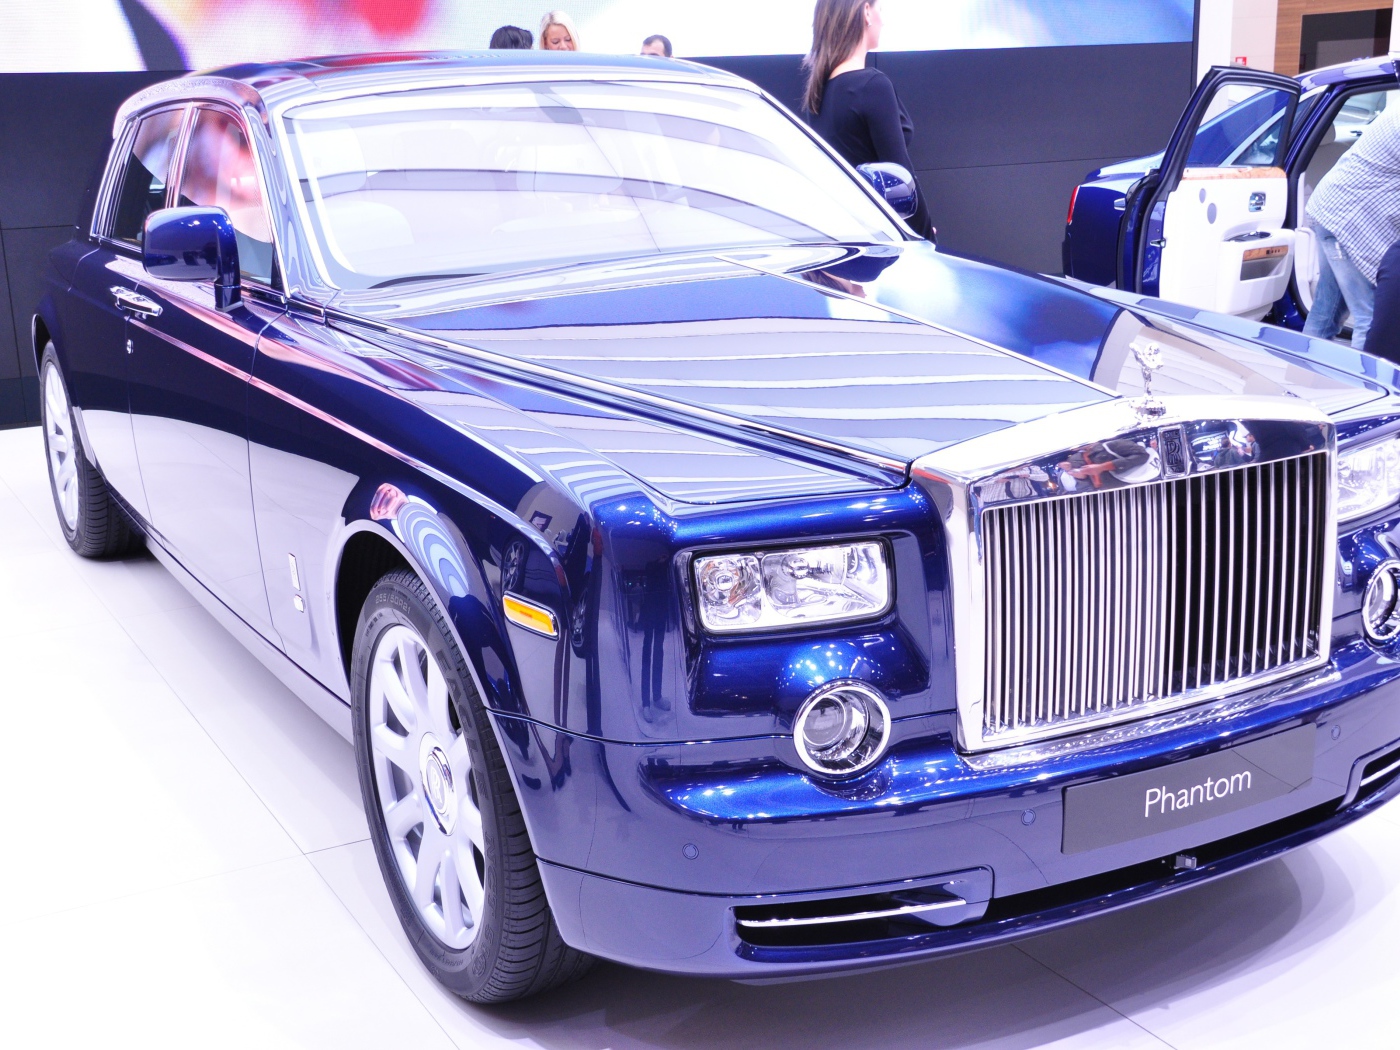 Blue Rolls-Royce on display